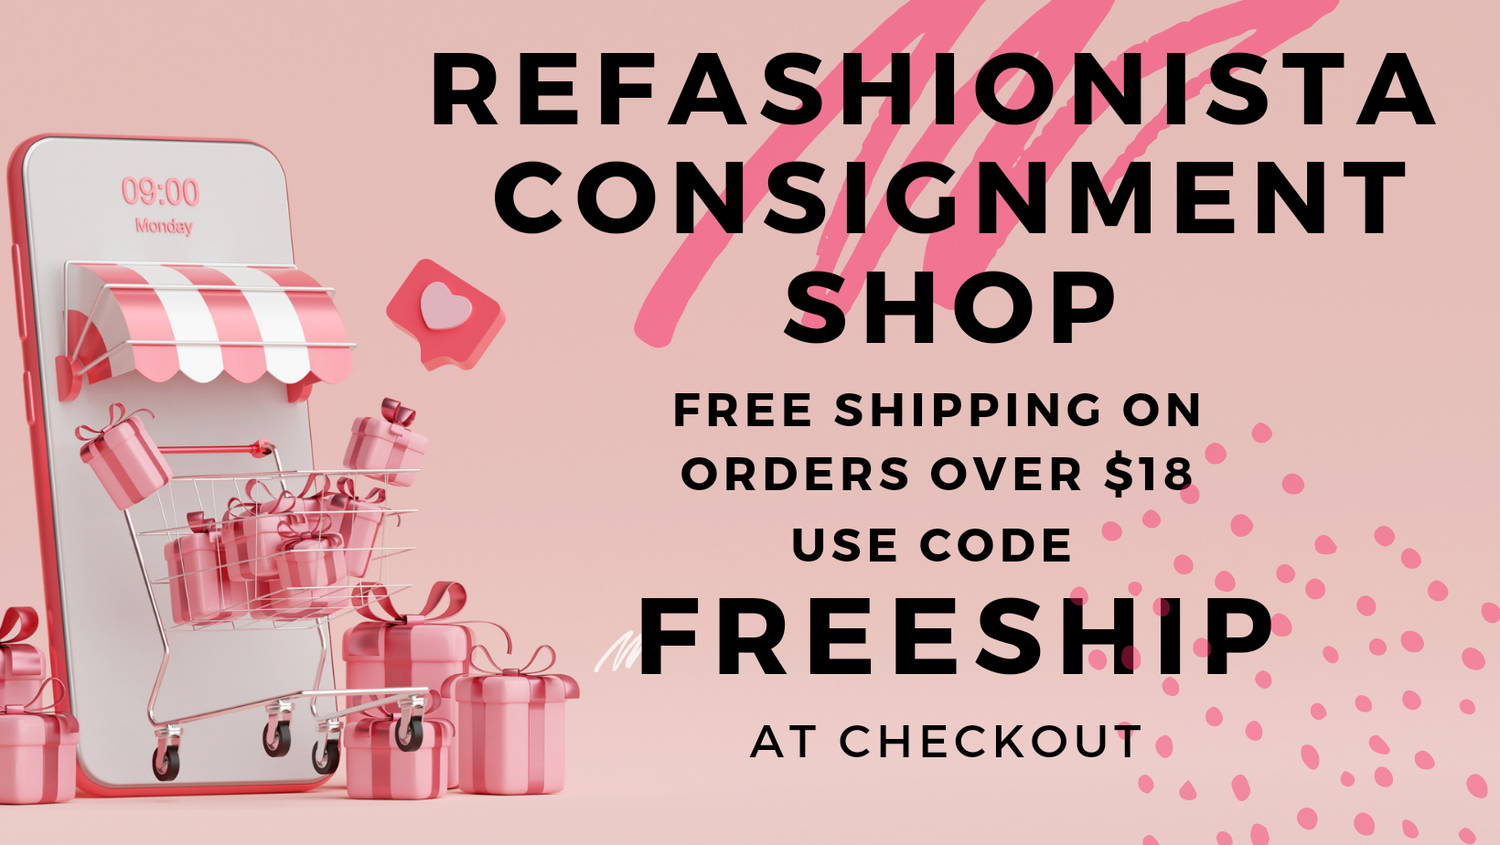 Refashionista Consignment Shop Online — ReFashionista Consignment Shop